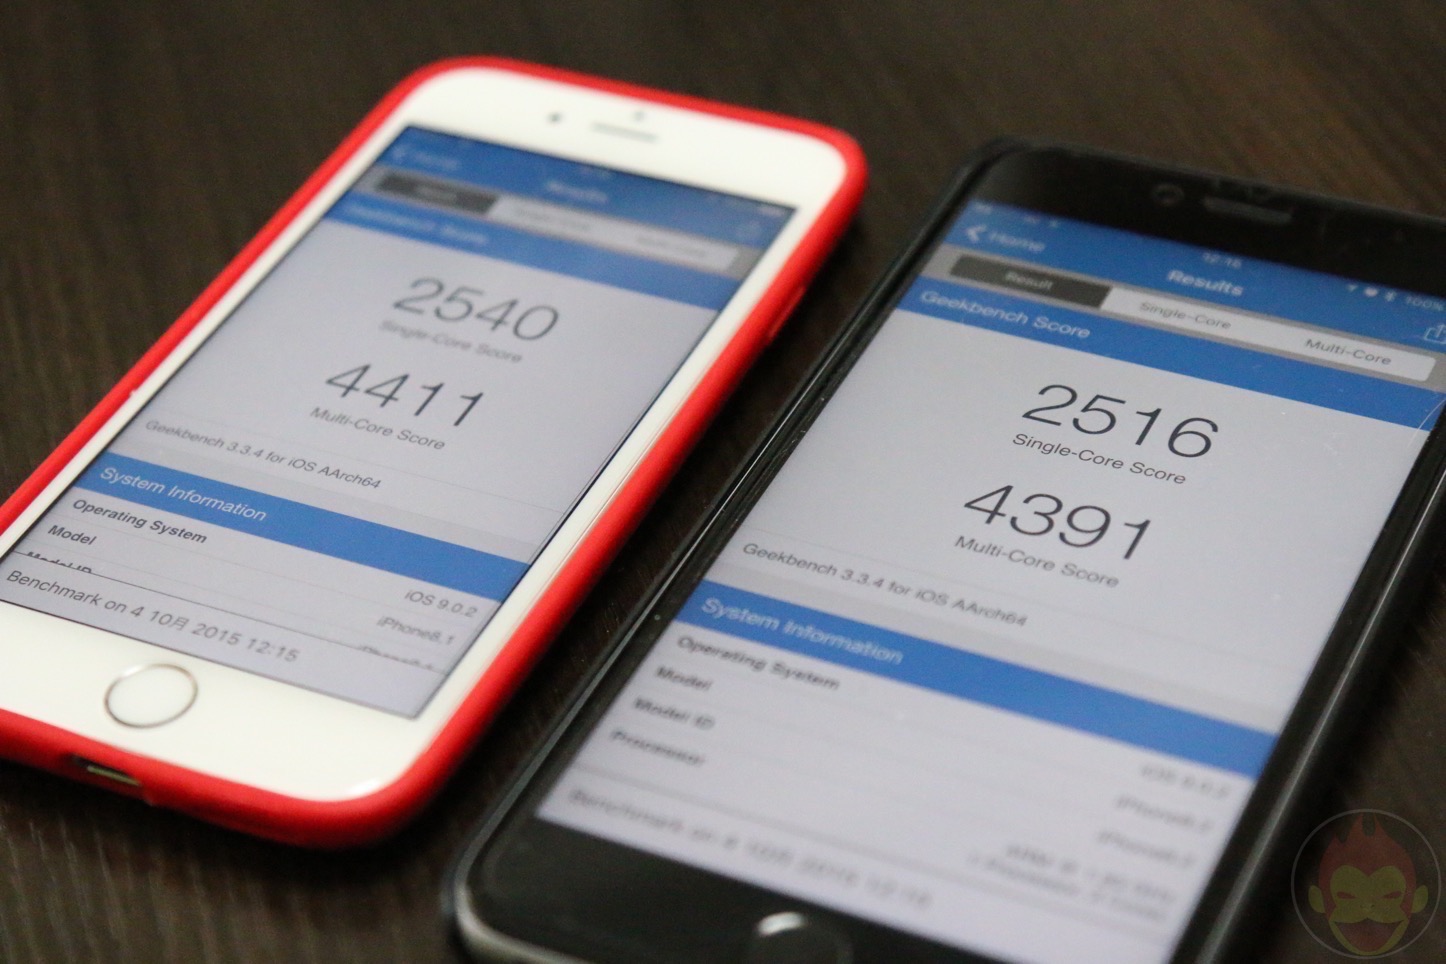 iPhone6s-6splus-comparison-benchmark-tests-05.JPG